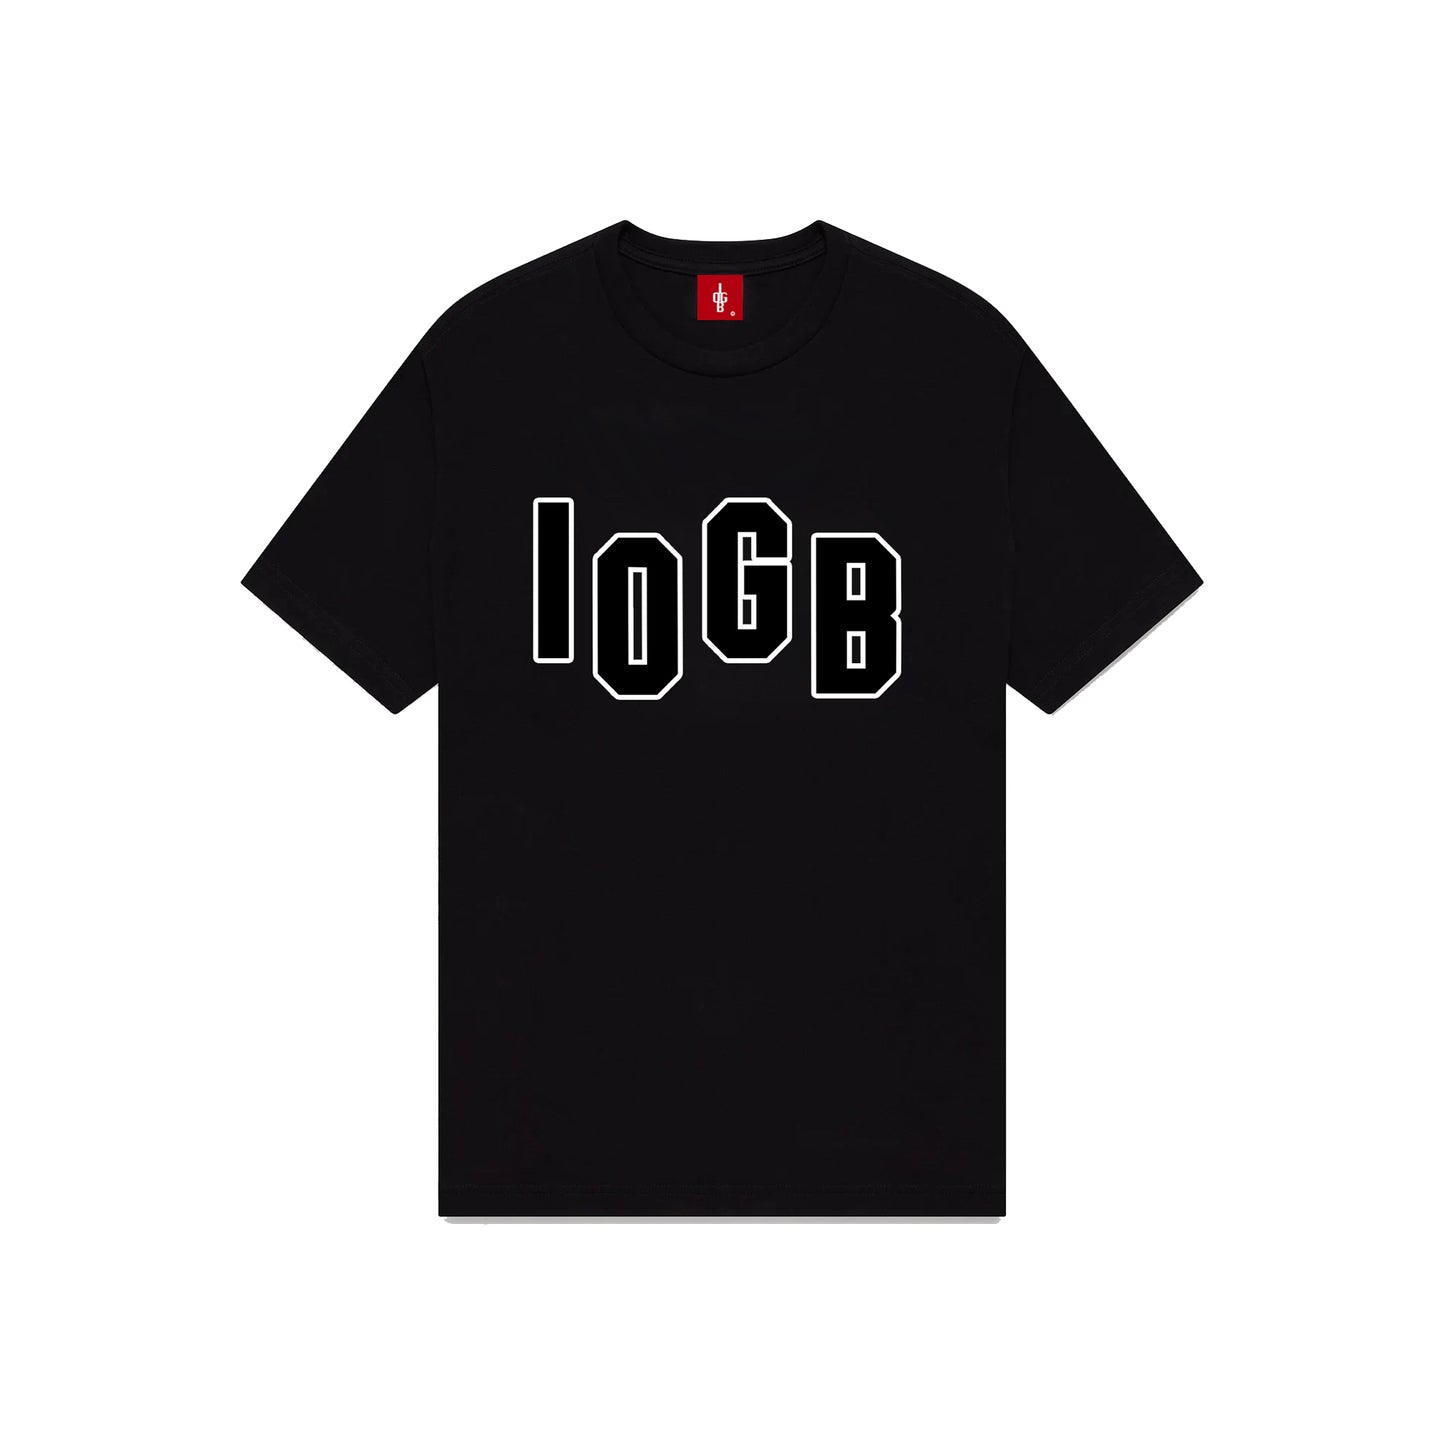 'IOGB' Wave Outline T-Shirt